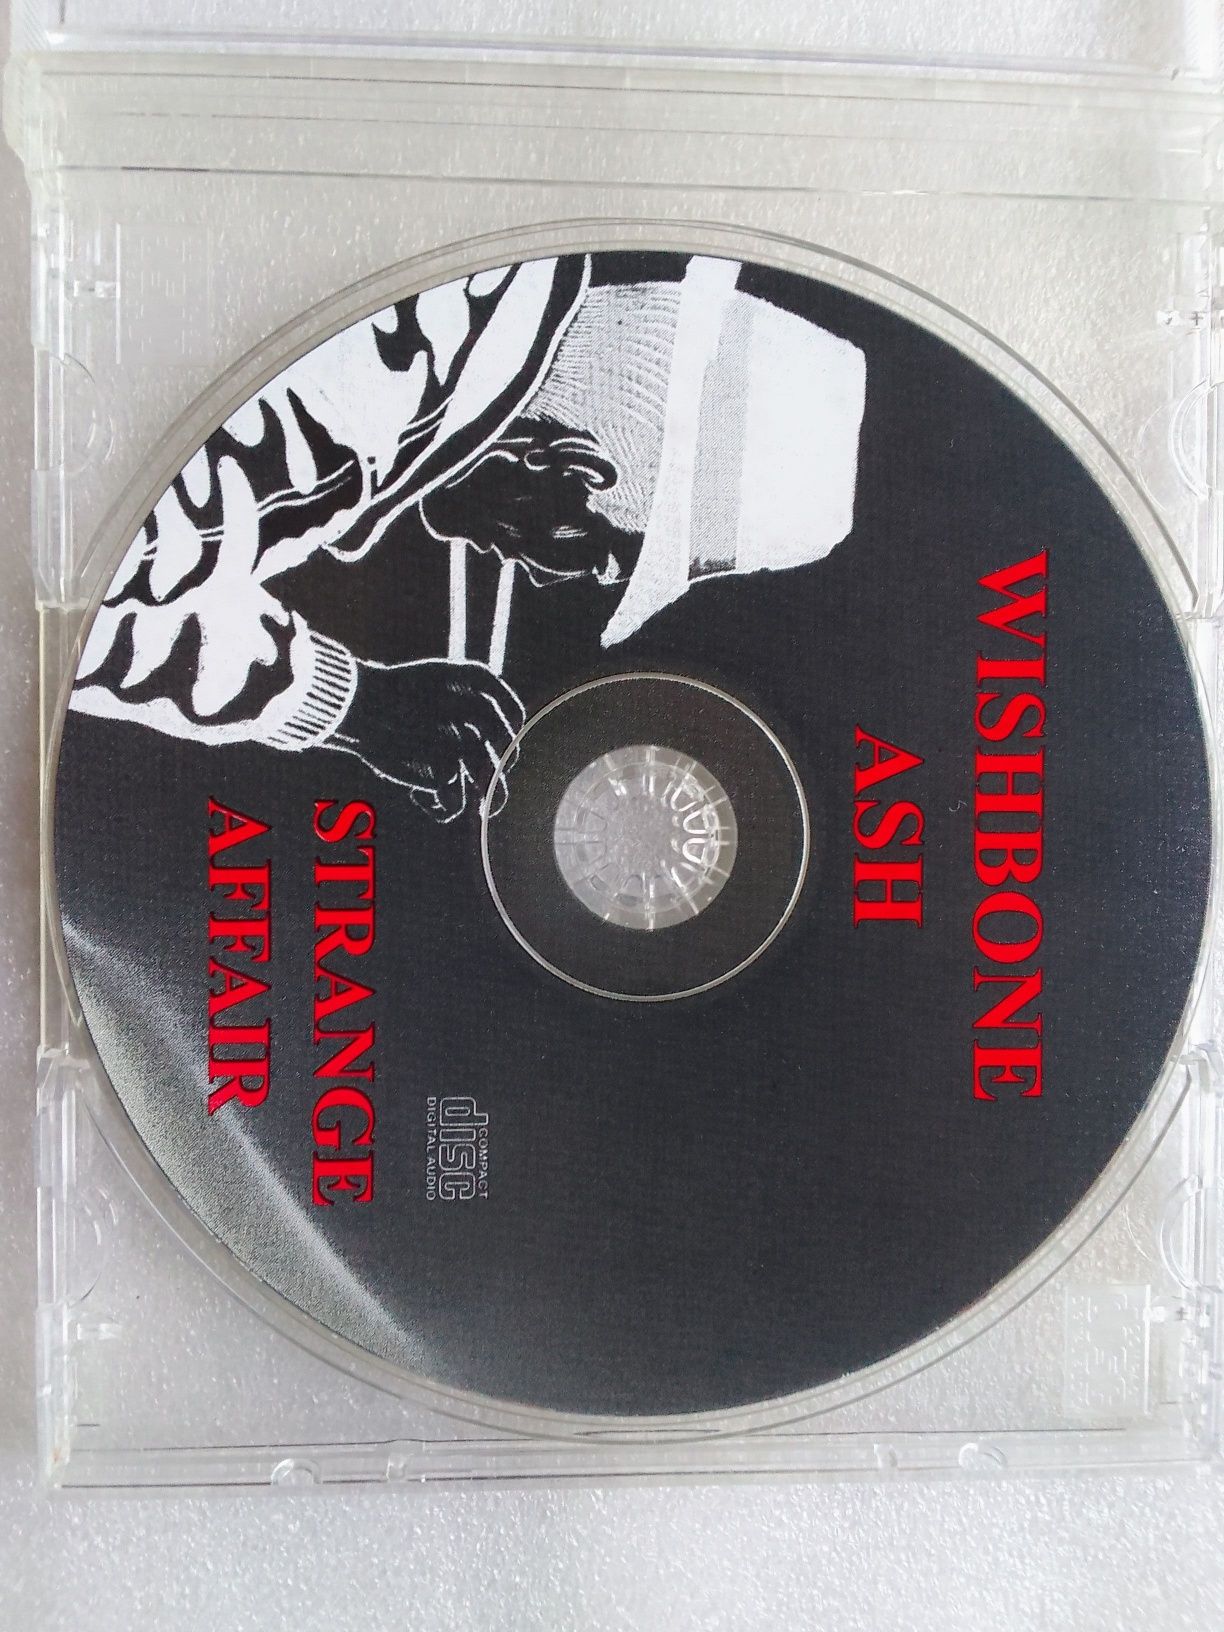 WISHBONE ASH "Strange Affair". CD Audio.